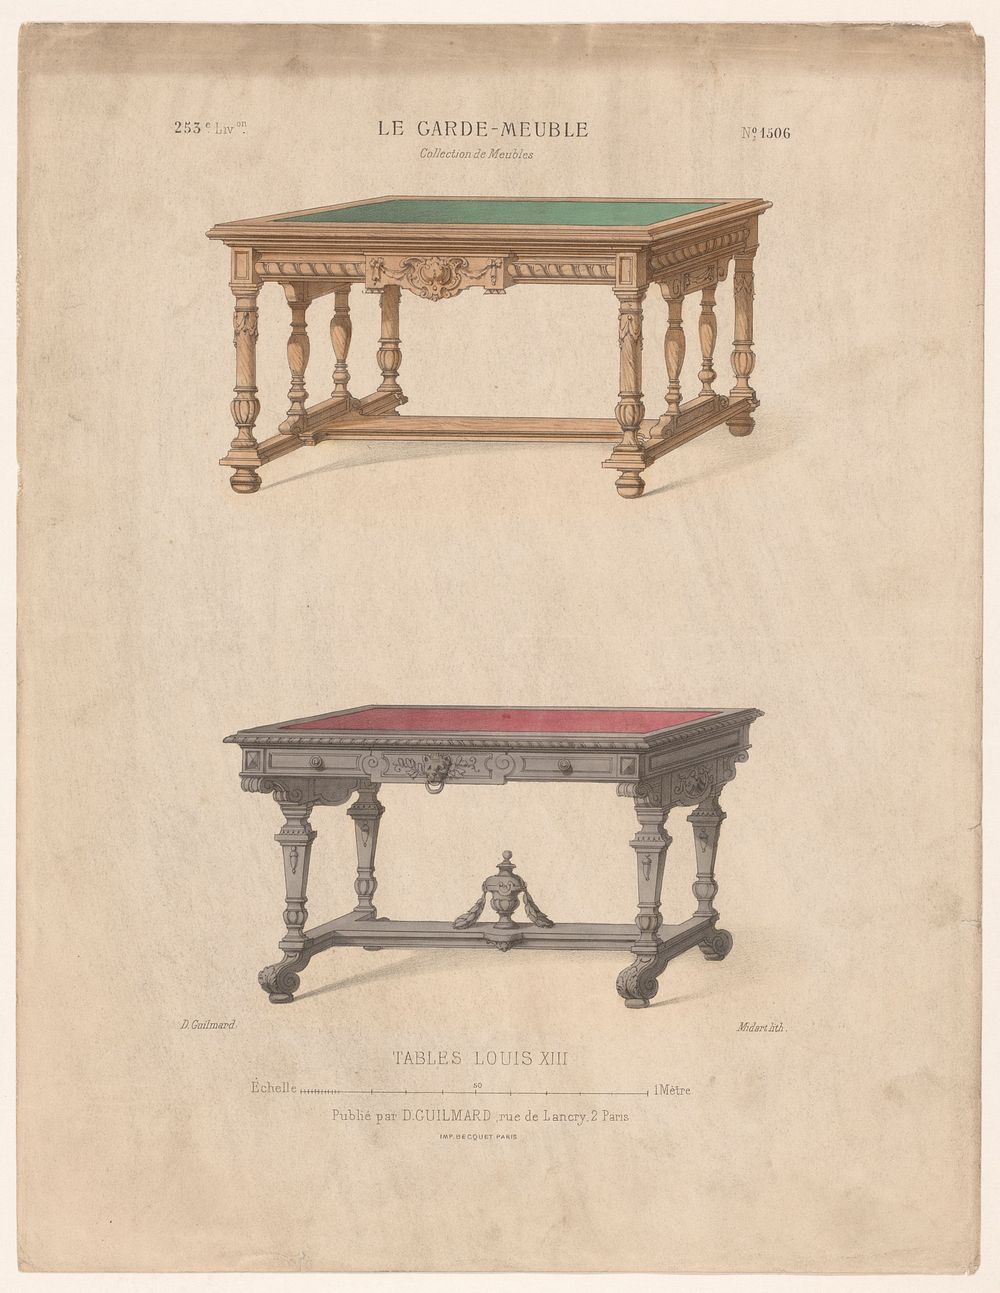 Twee tafels (1839 - 1885) by Midart, Becquet and Désiré Guilmard